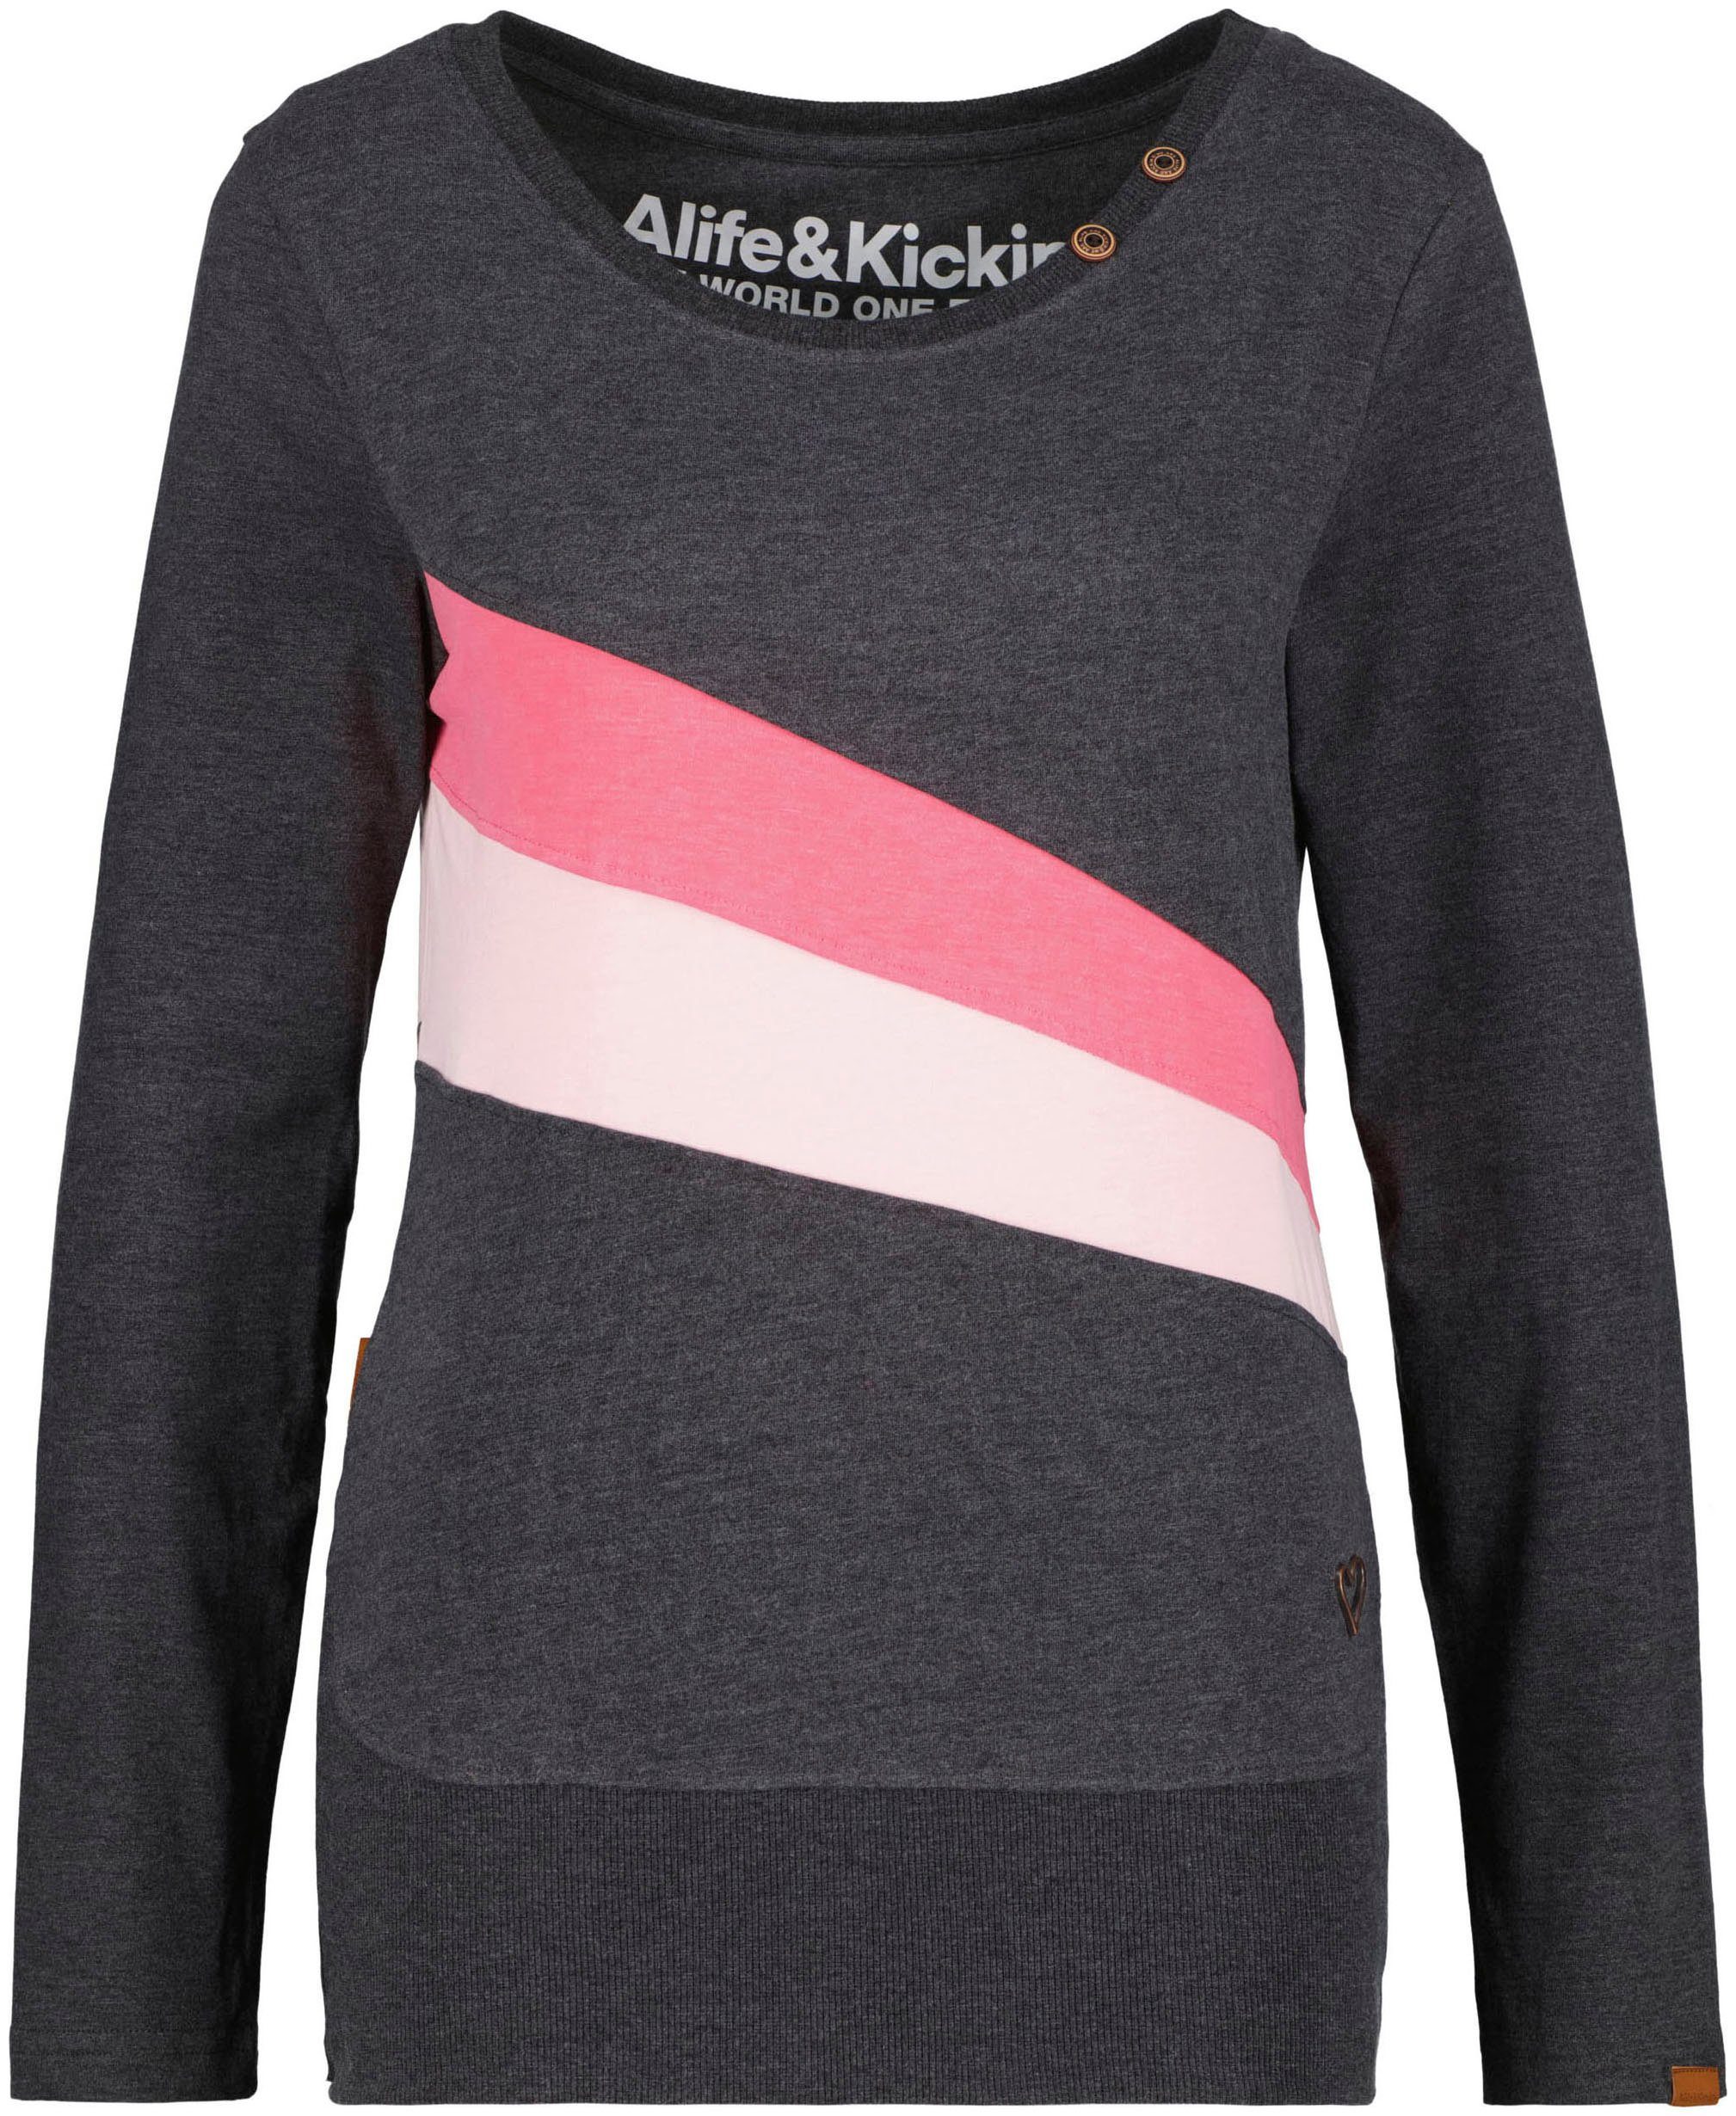 CleaAK & moonless Kickin T-Shirt Alife